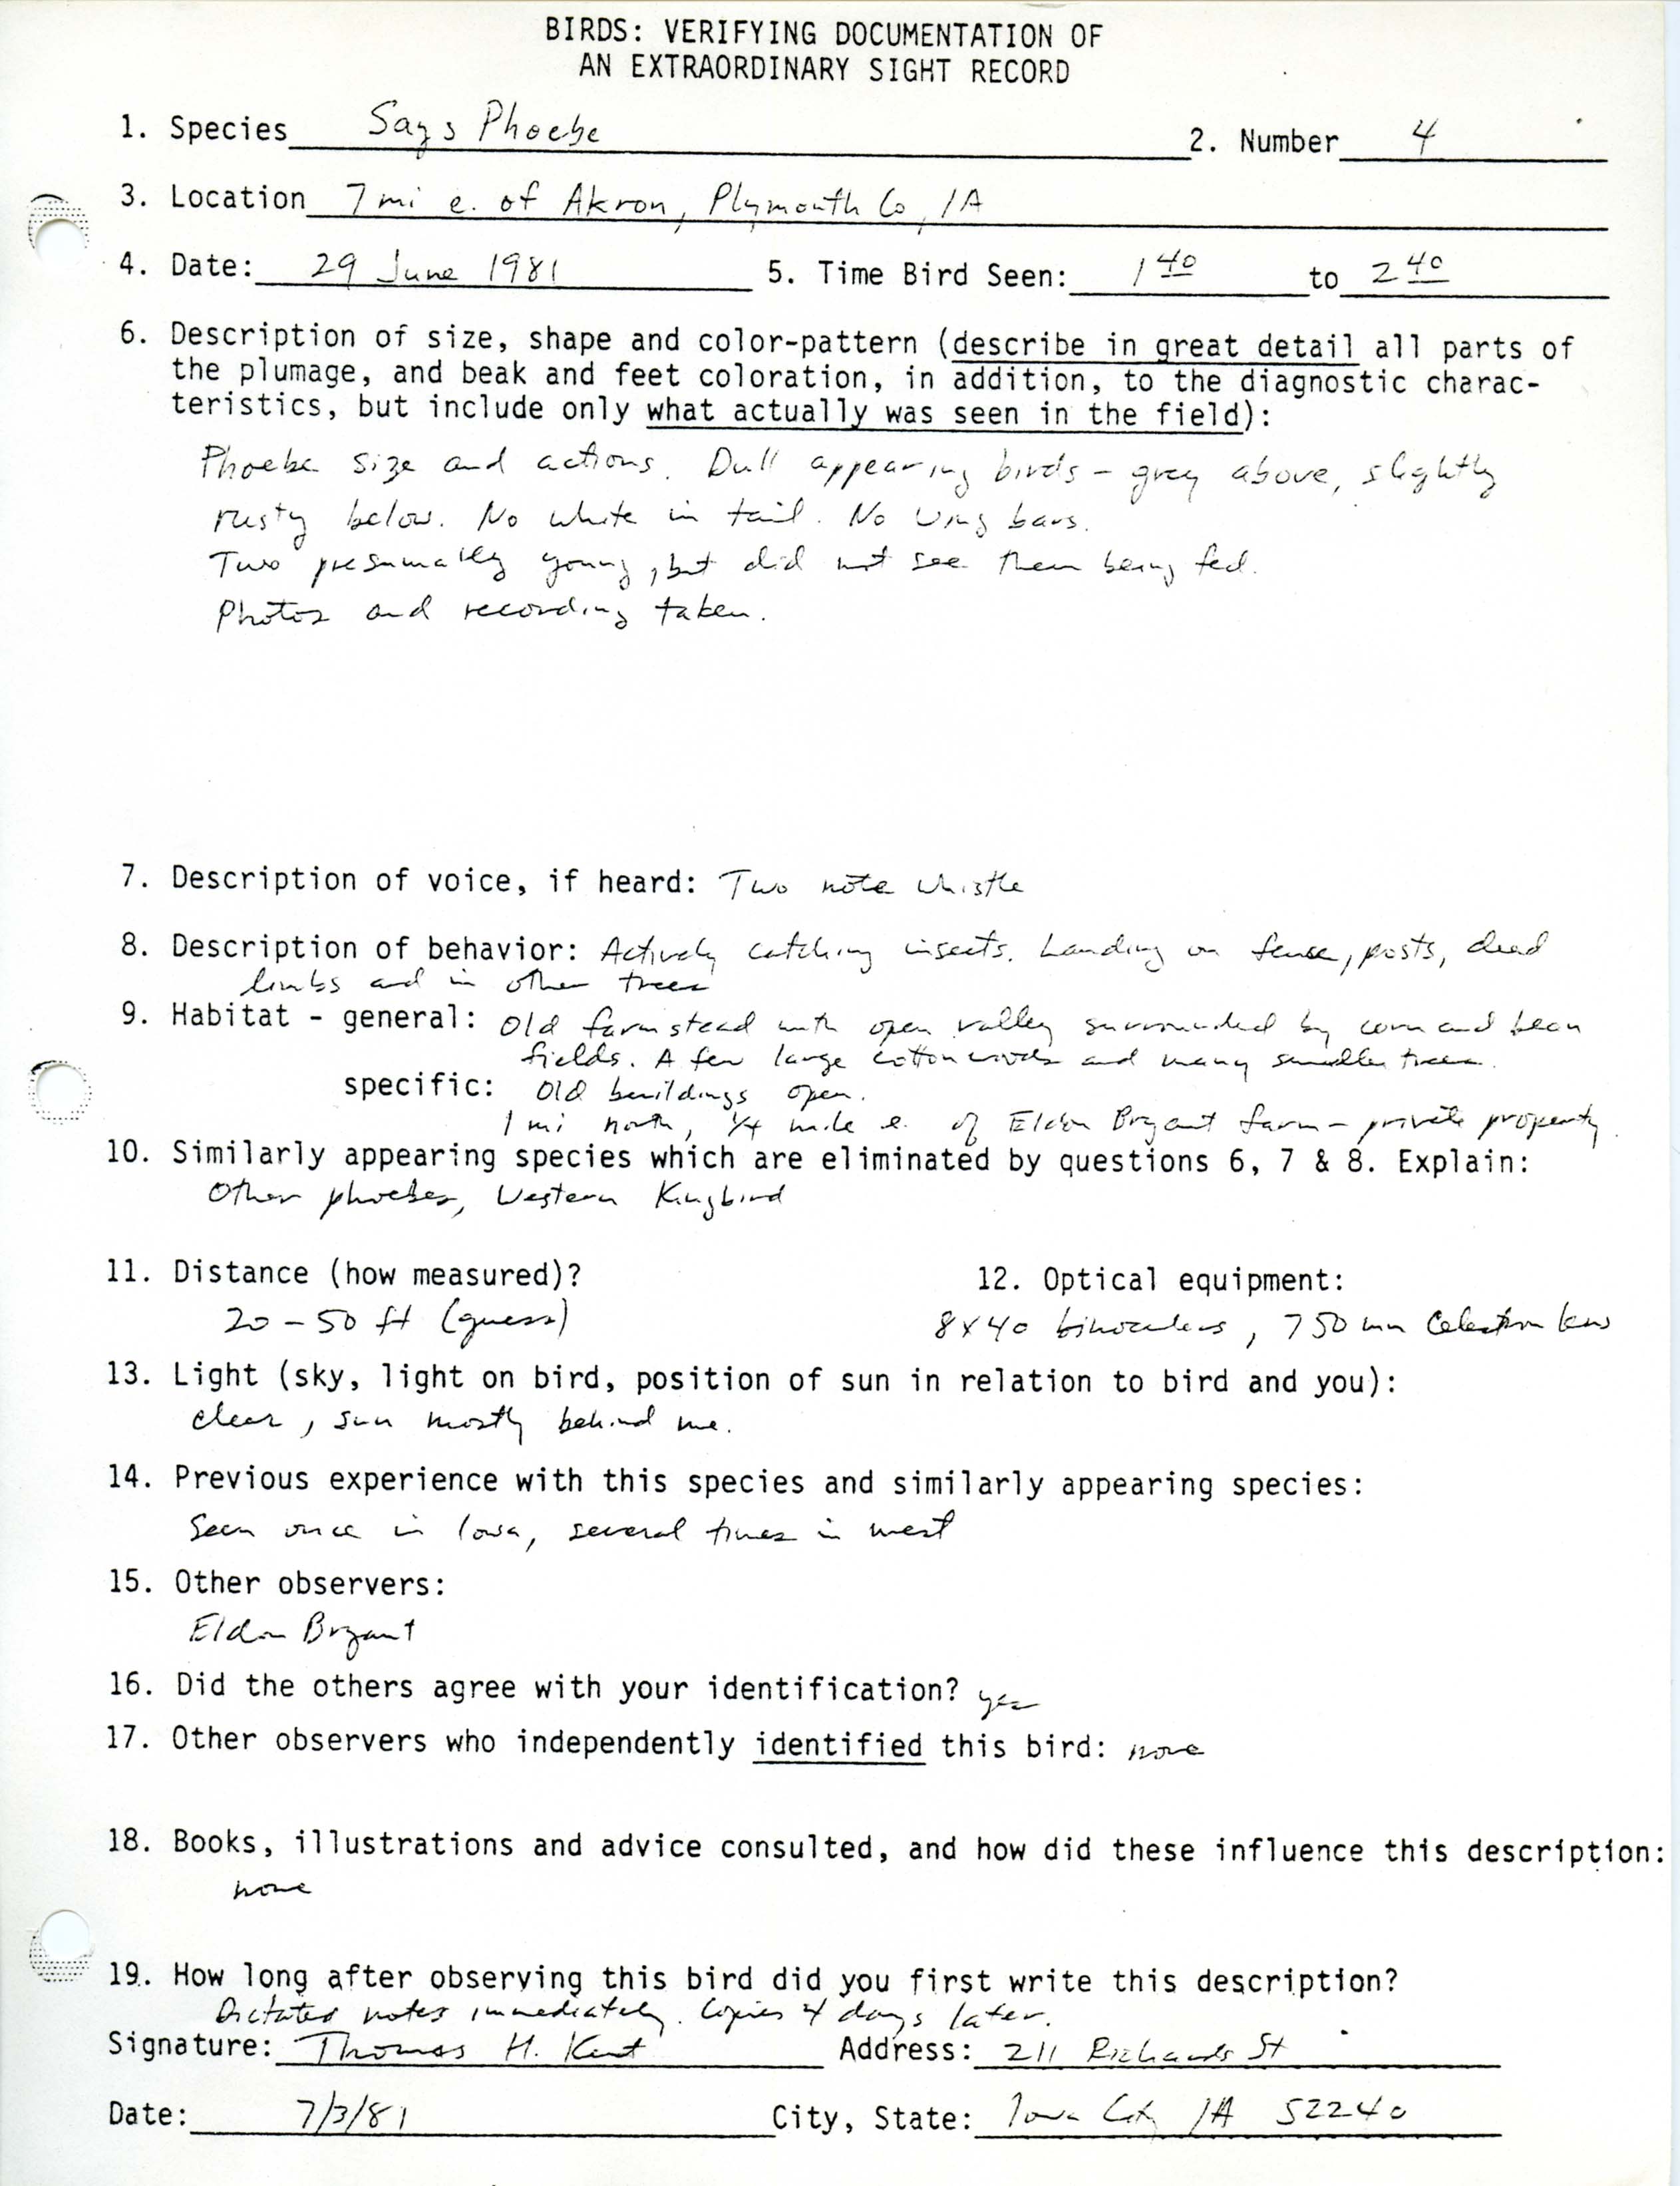 Rare bird documentation form for Say's Phoebe near Ruble, 1981